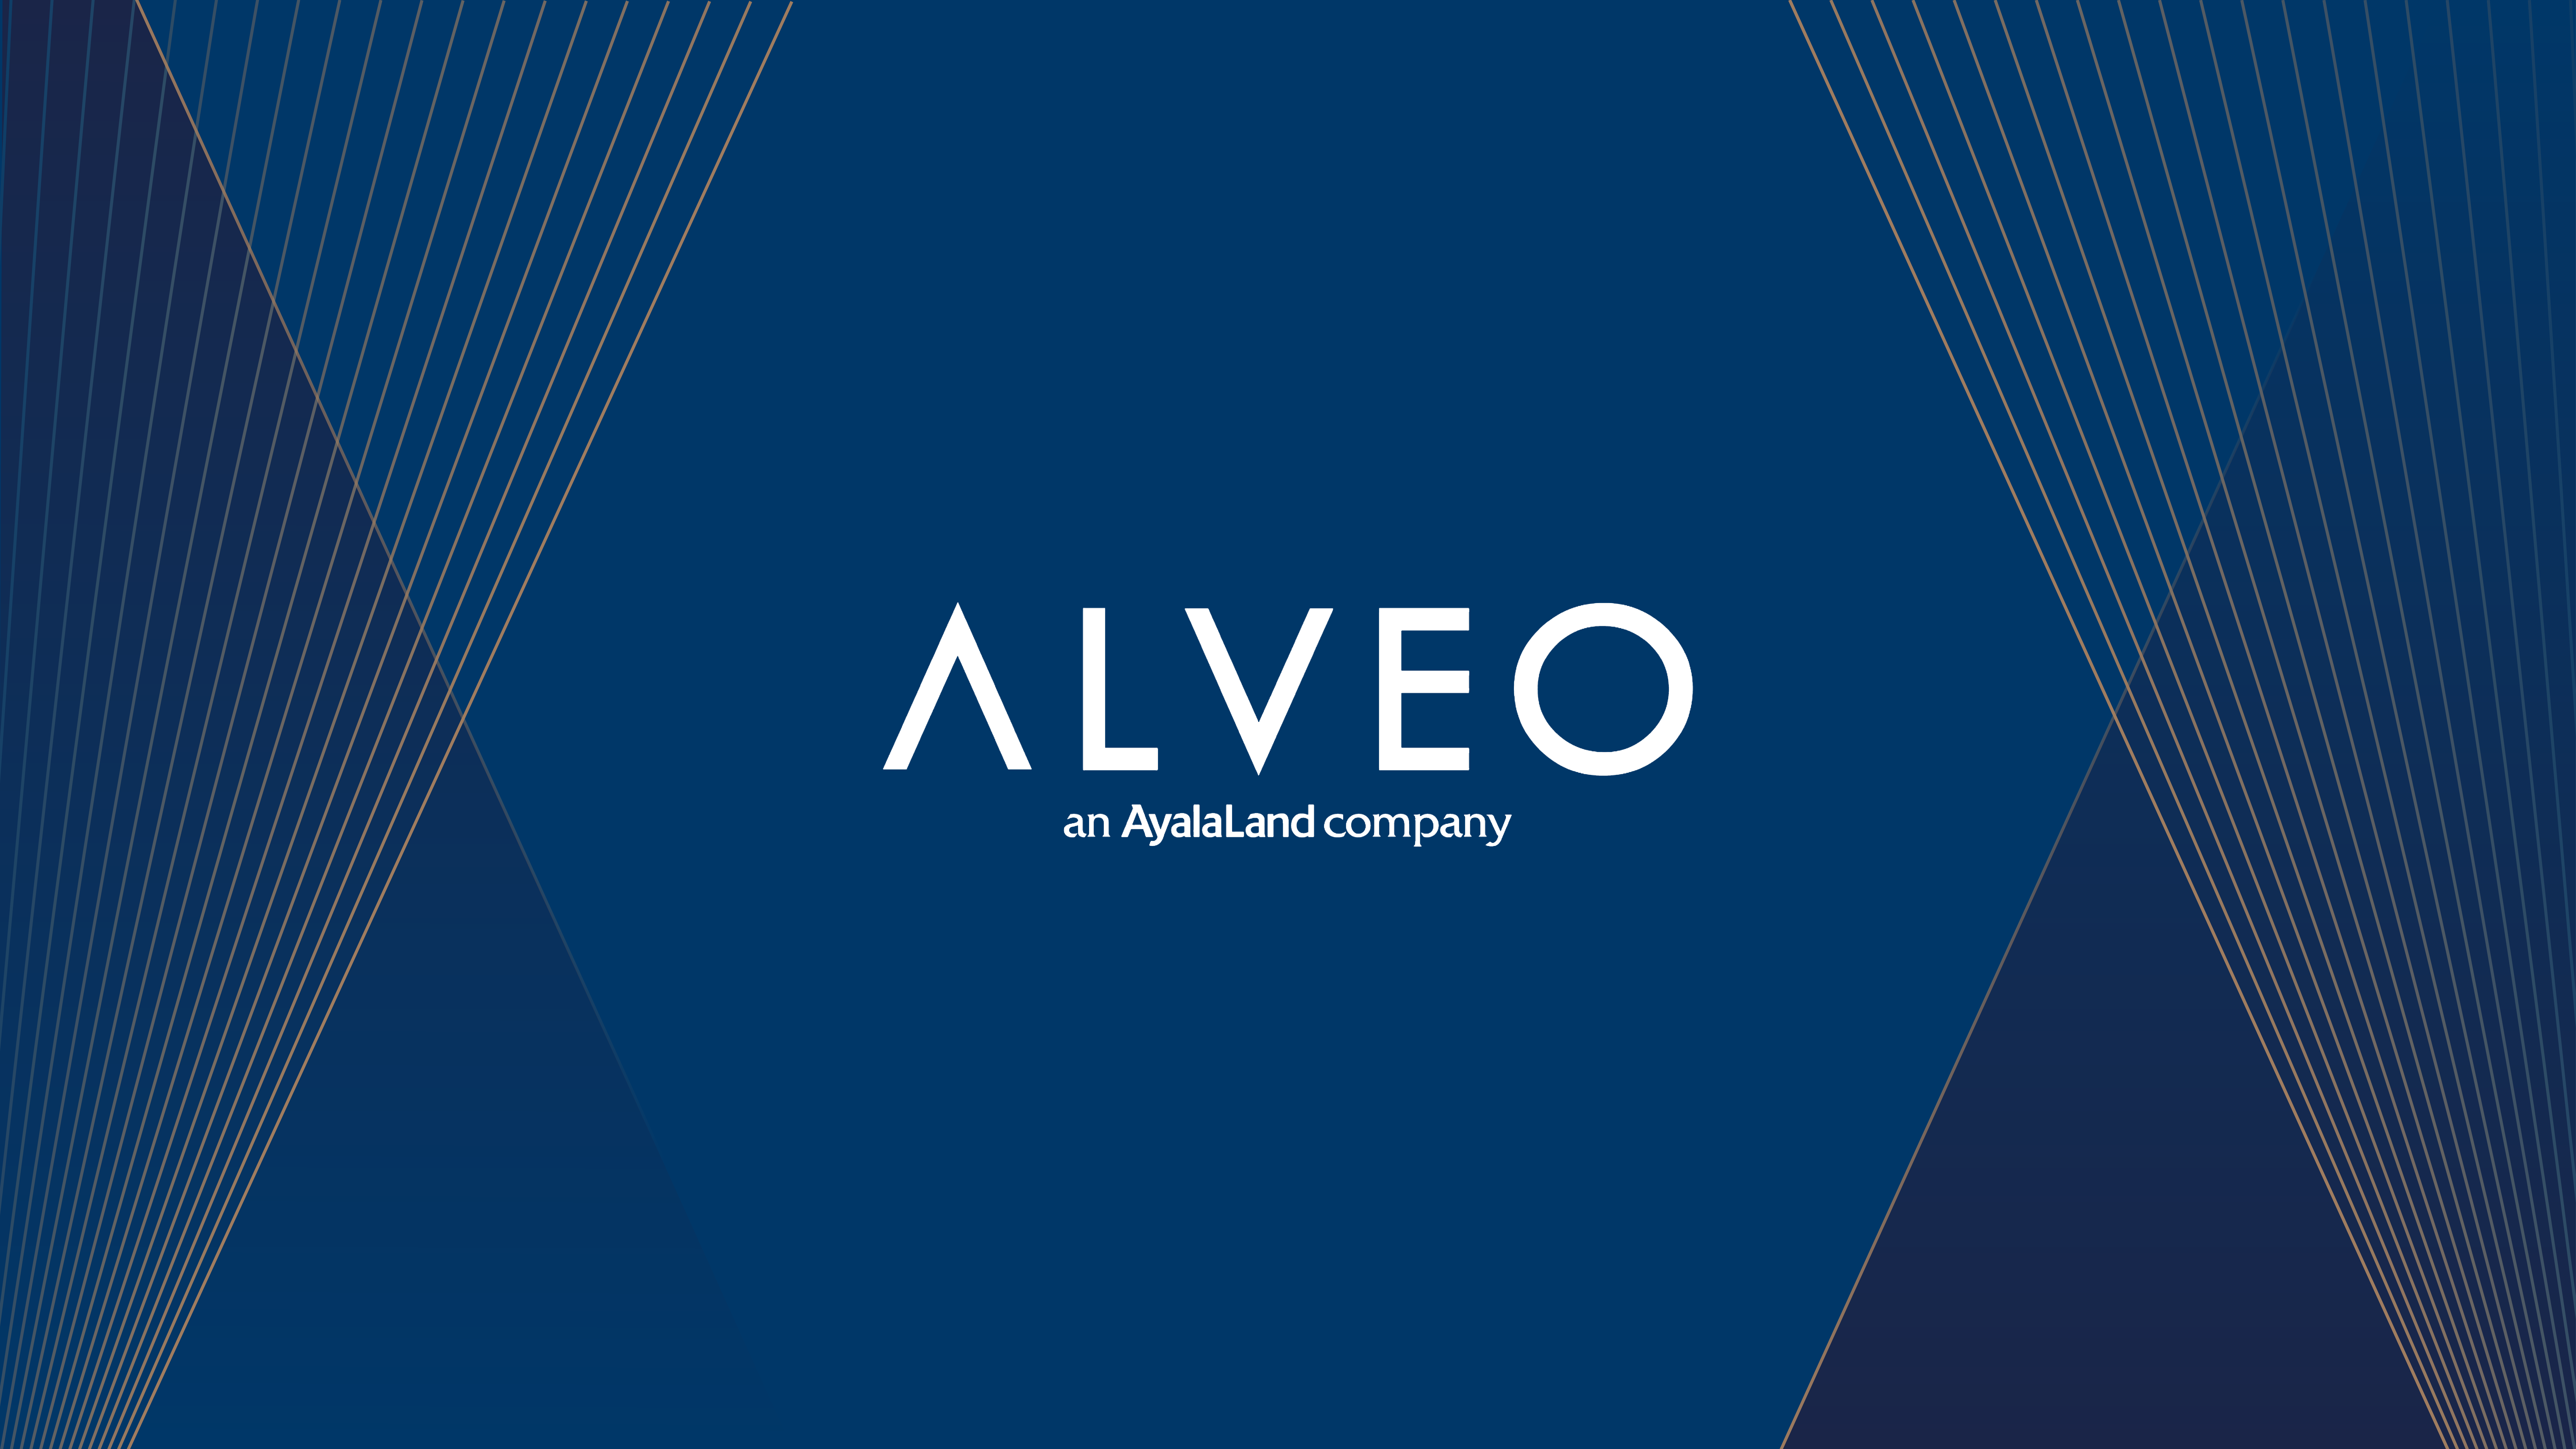 Branding for Filipino real estate company Alveo, an AyalaLand Company